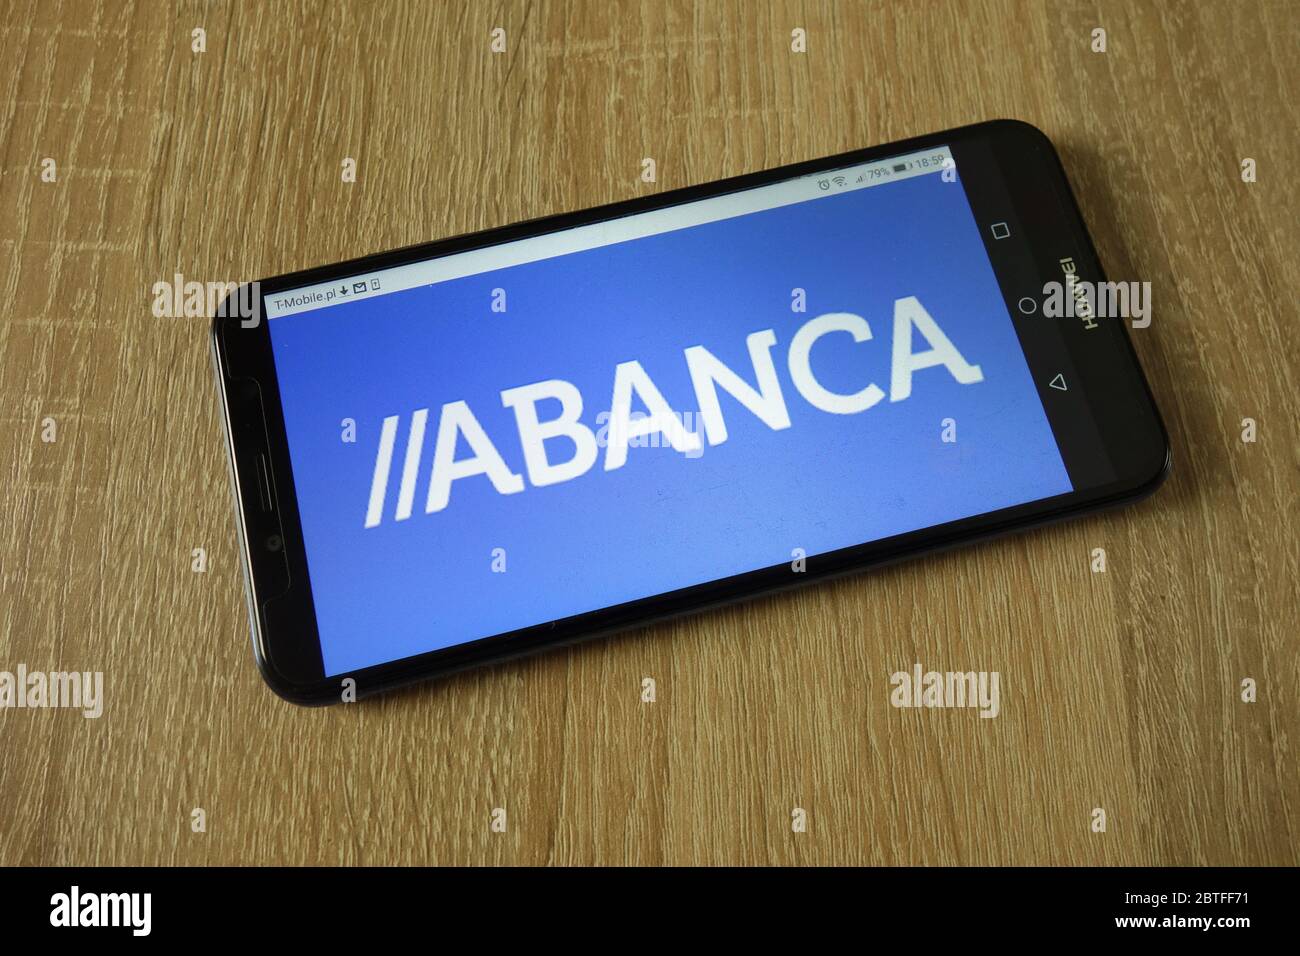 ABANCA Corporacion Bancaria, S.A. logo displayed on smartphone Stock Photo